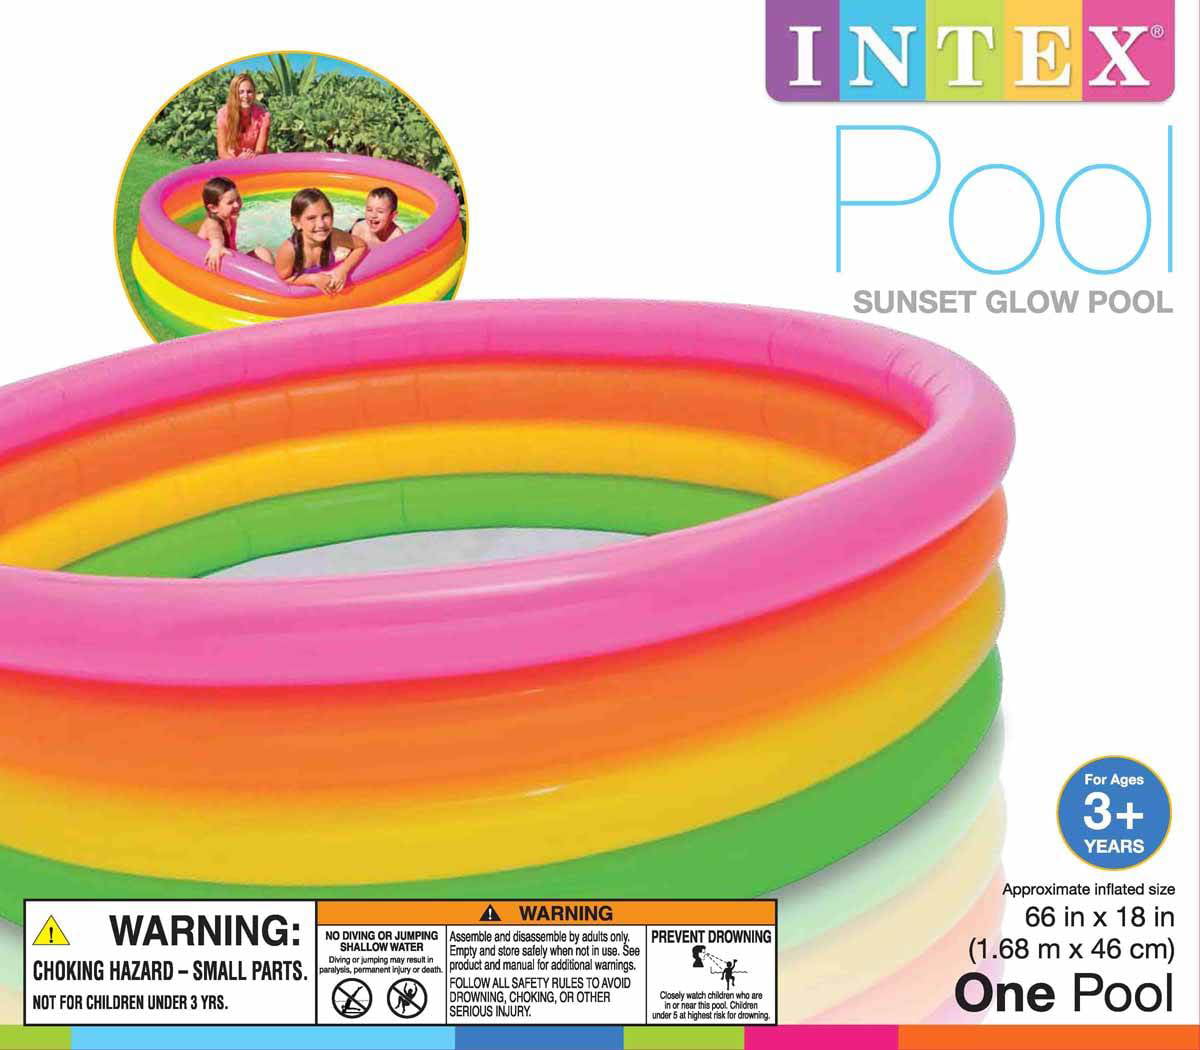 Intex Inflatable Sunset Glow Colorful Backyard Kids Play Pool57422EP